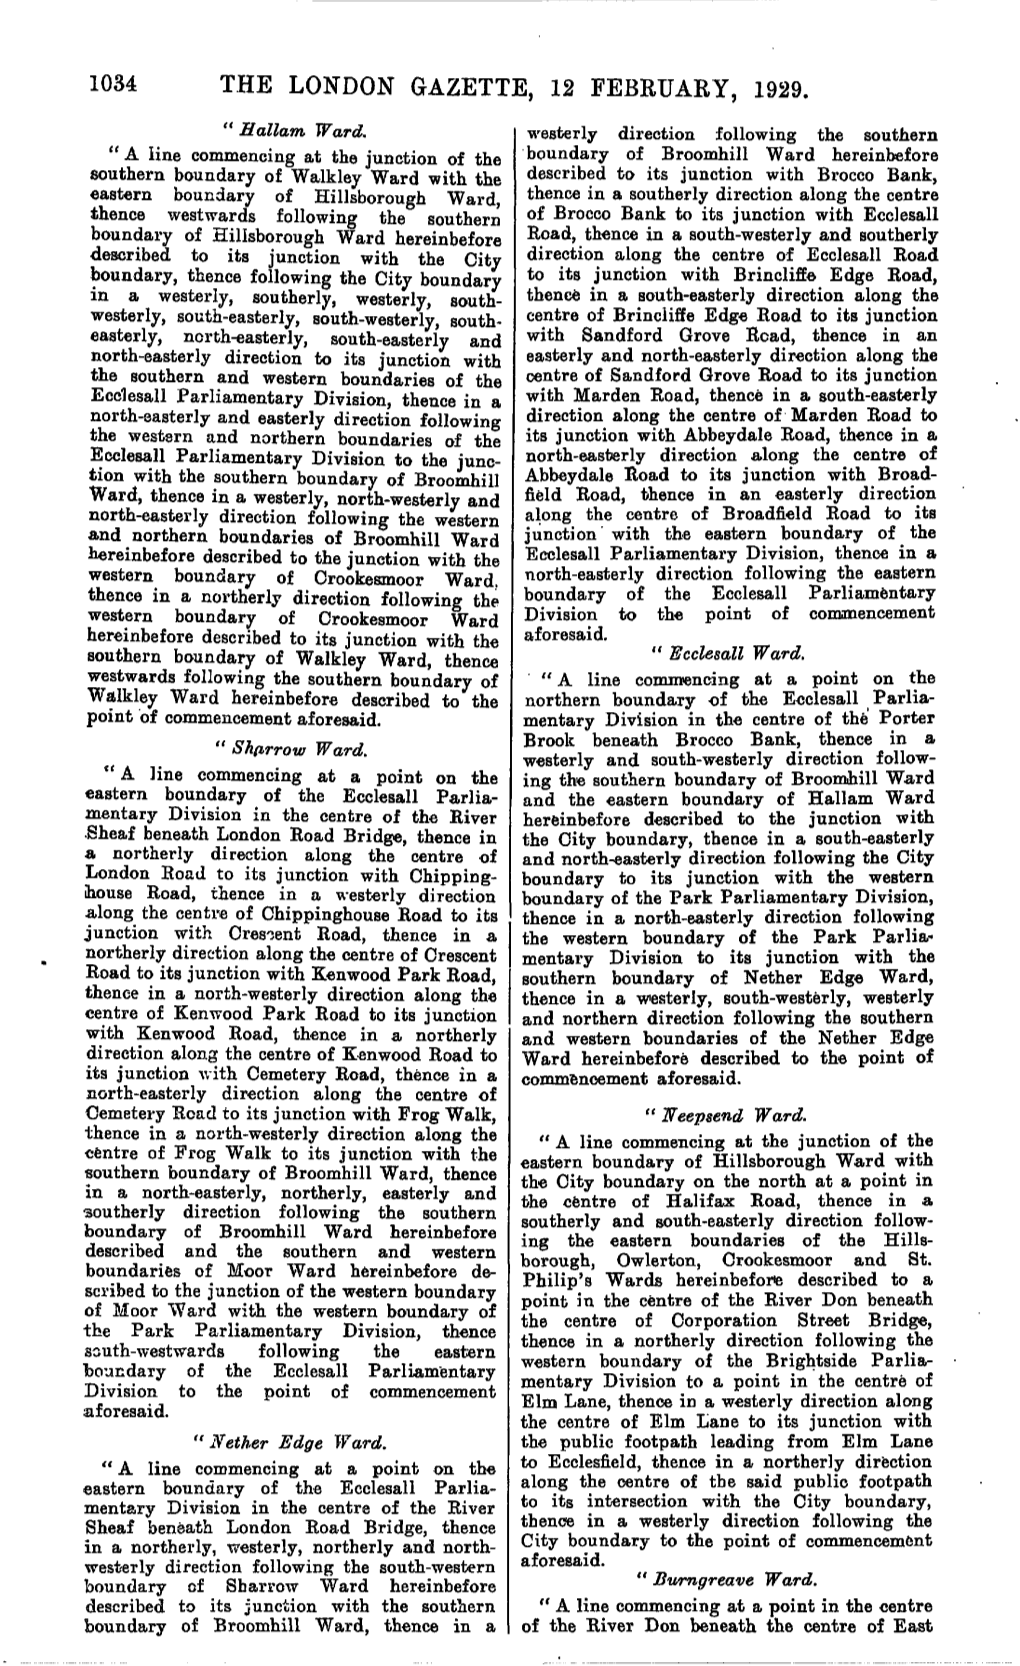 The London Gazette, 12 February, 1929